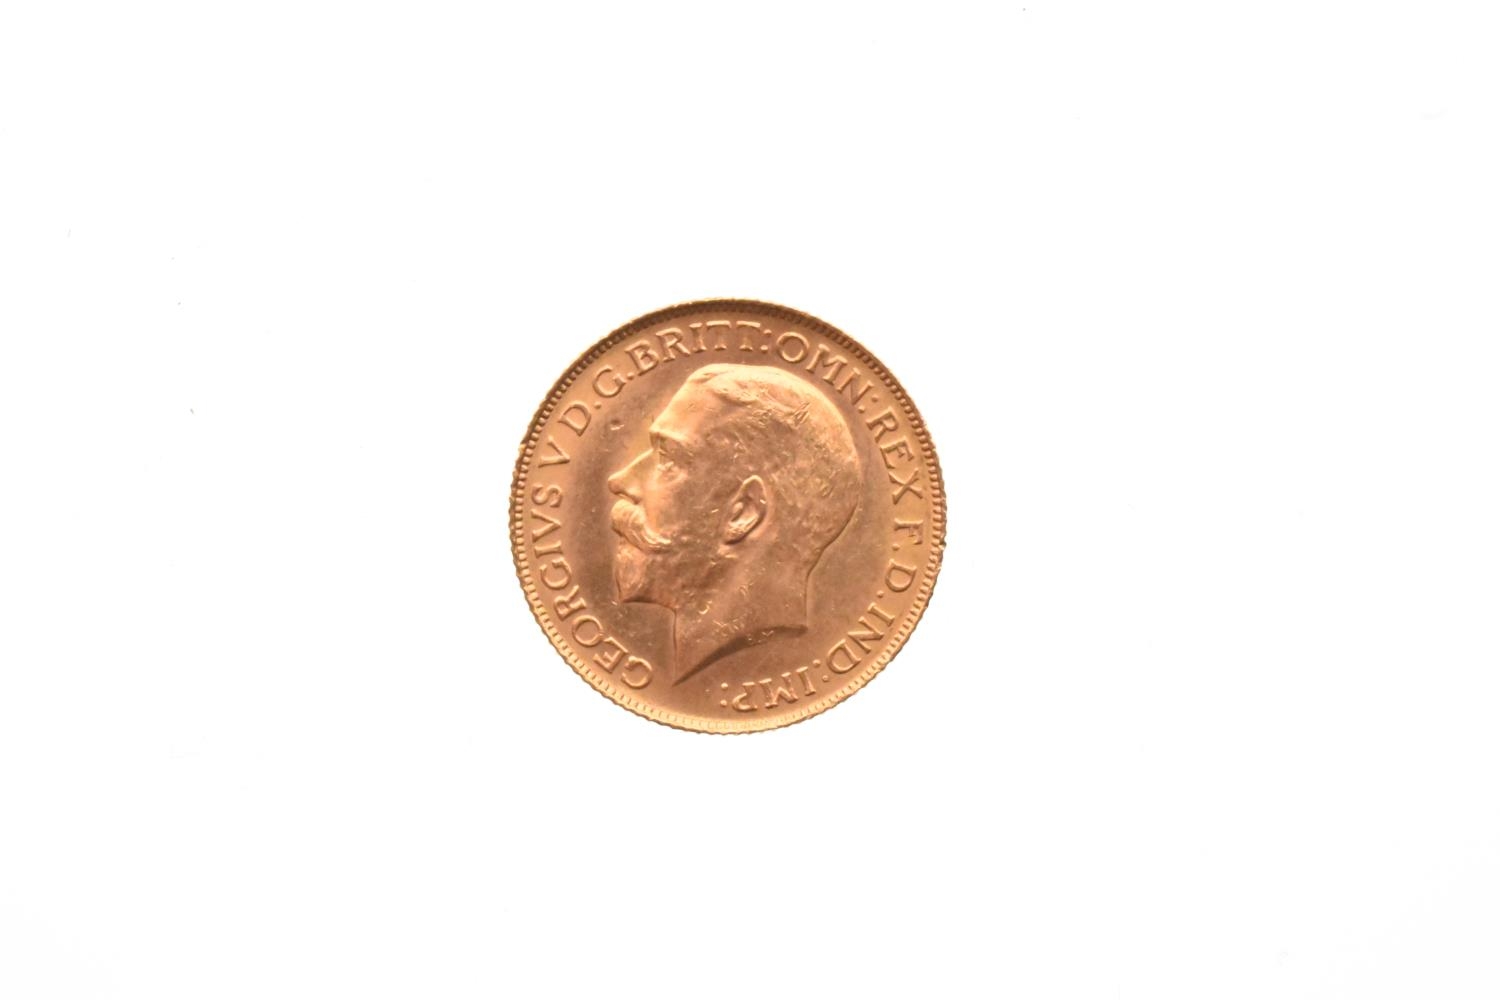 United Kingdom - George V (1910-1936), Sovereign, dated 1925, London mint, - Image 2 of 2